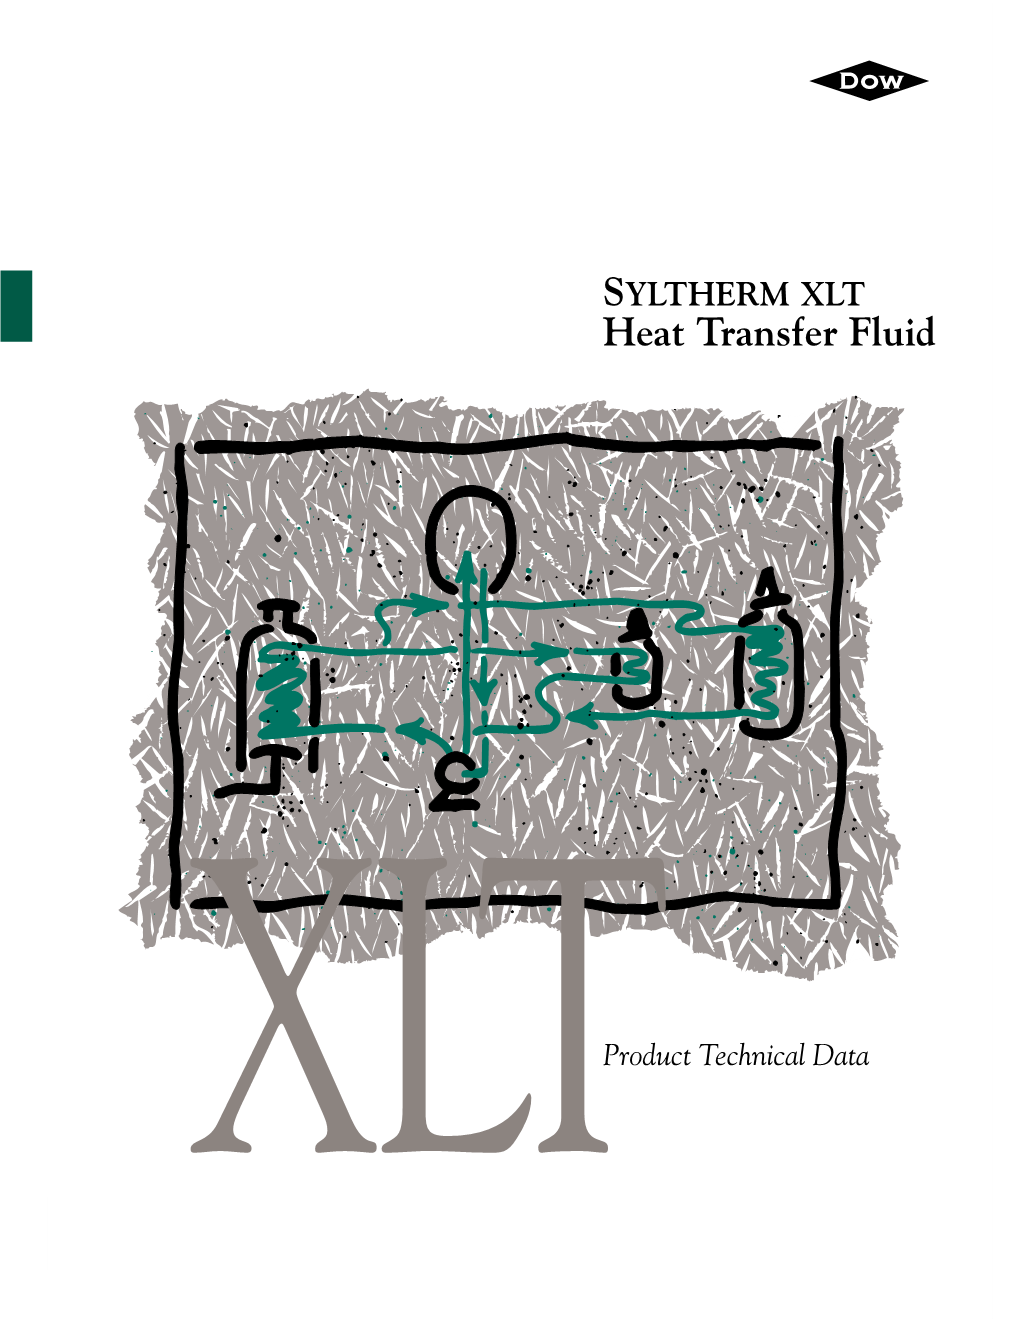 SYLTHERM XLT Heat Transfer Fluid